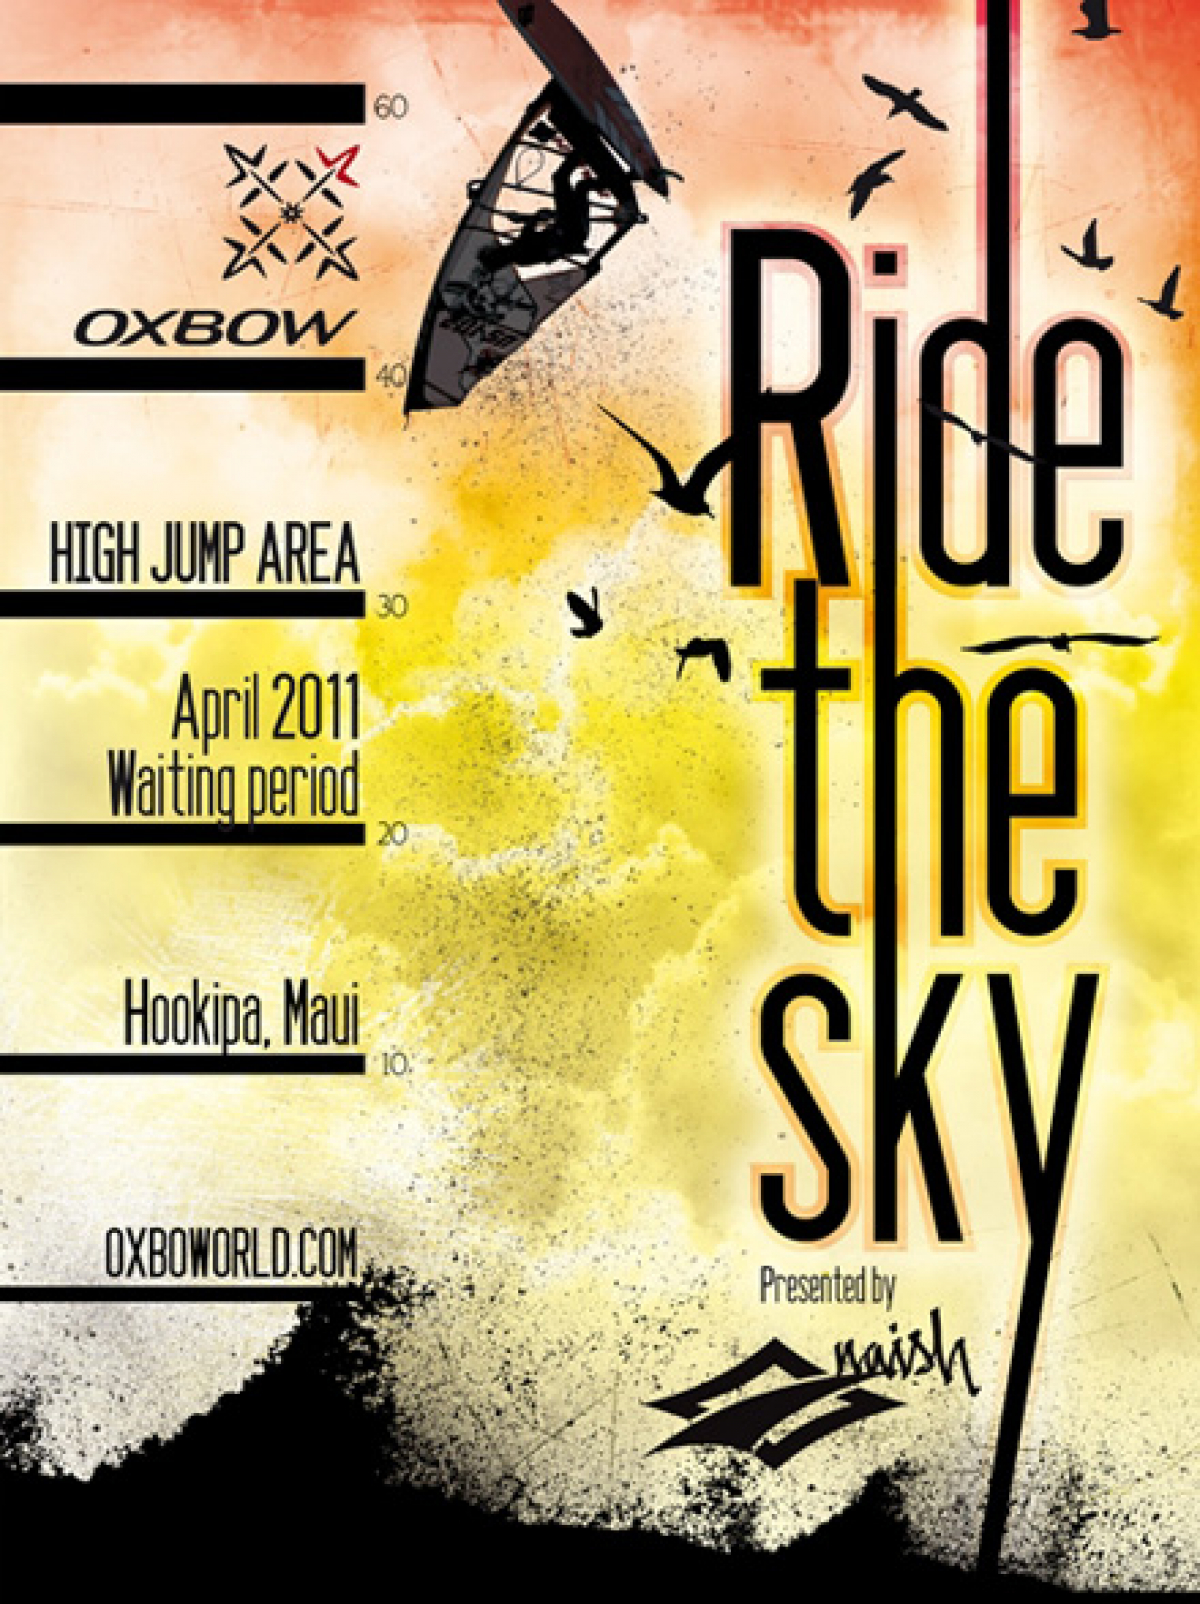 Oxbow - Ride the Sky